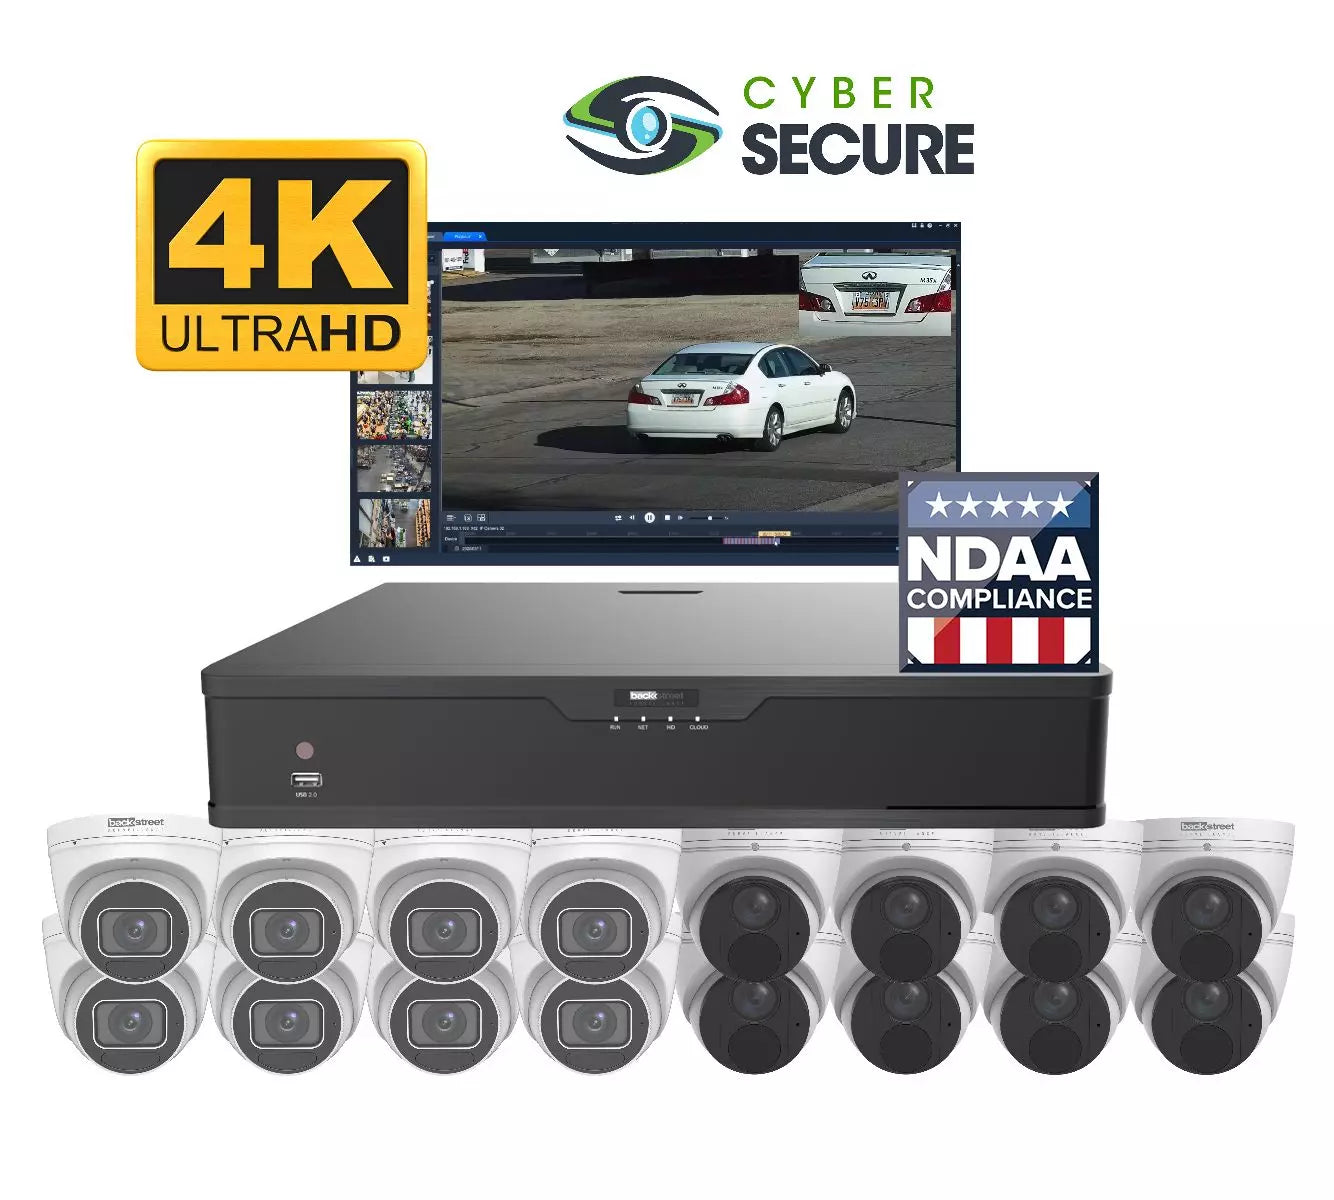 Backstreet Surveillance CSKIT16-CD-4K 16 Vandal Dome Security System, 4K & Zoom, 16-Channel